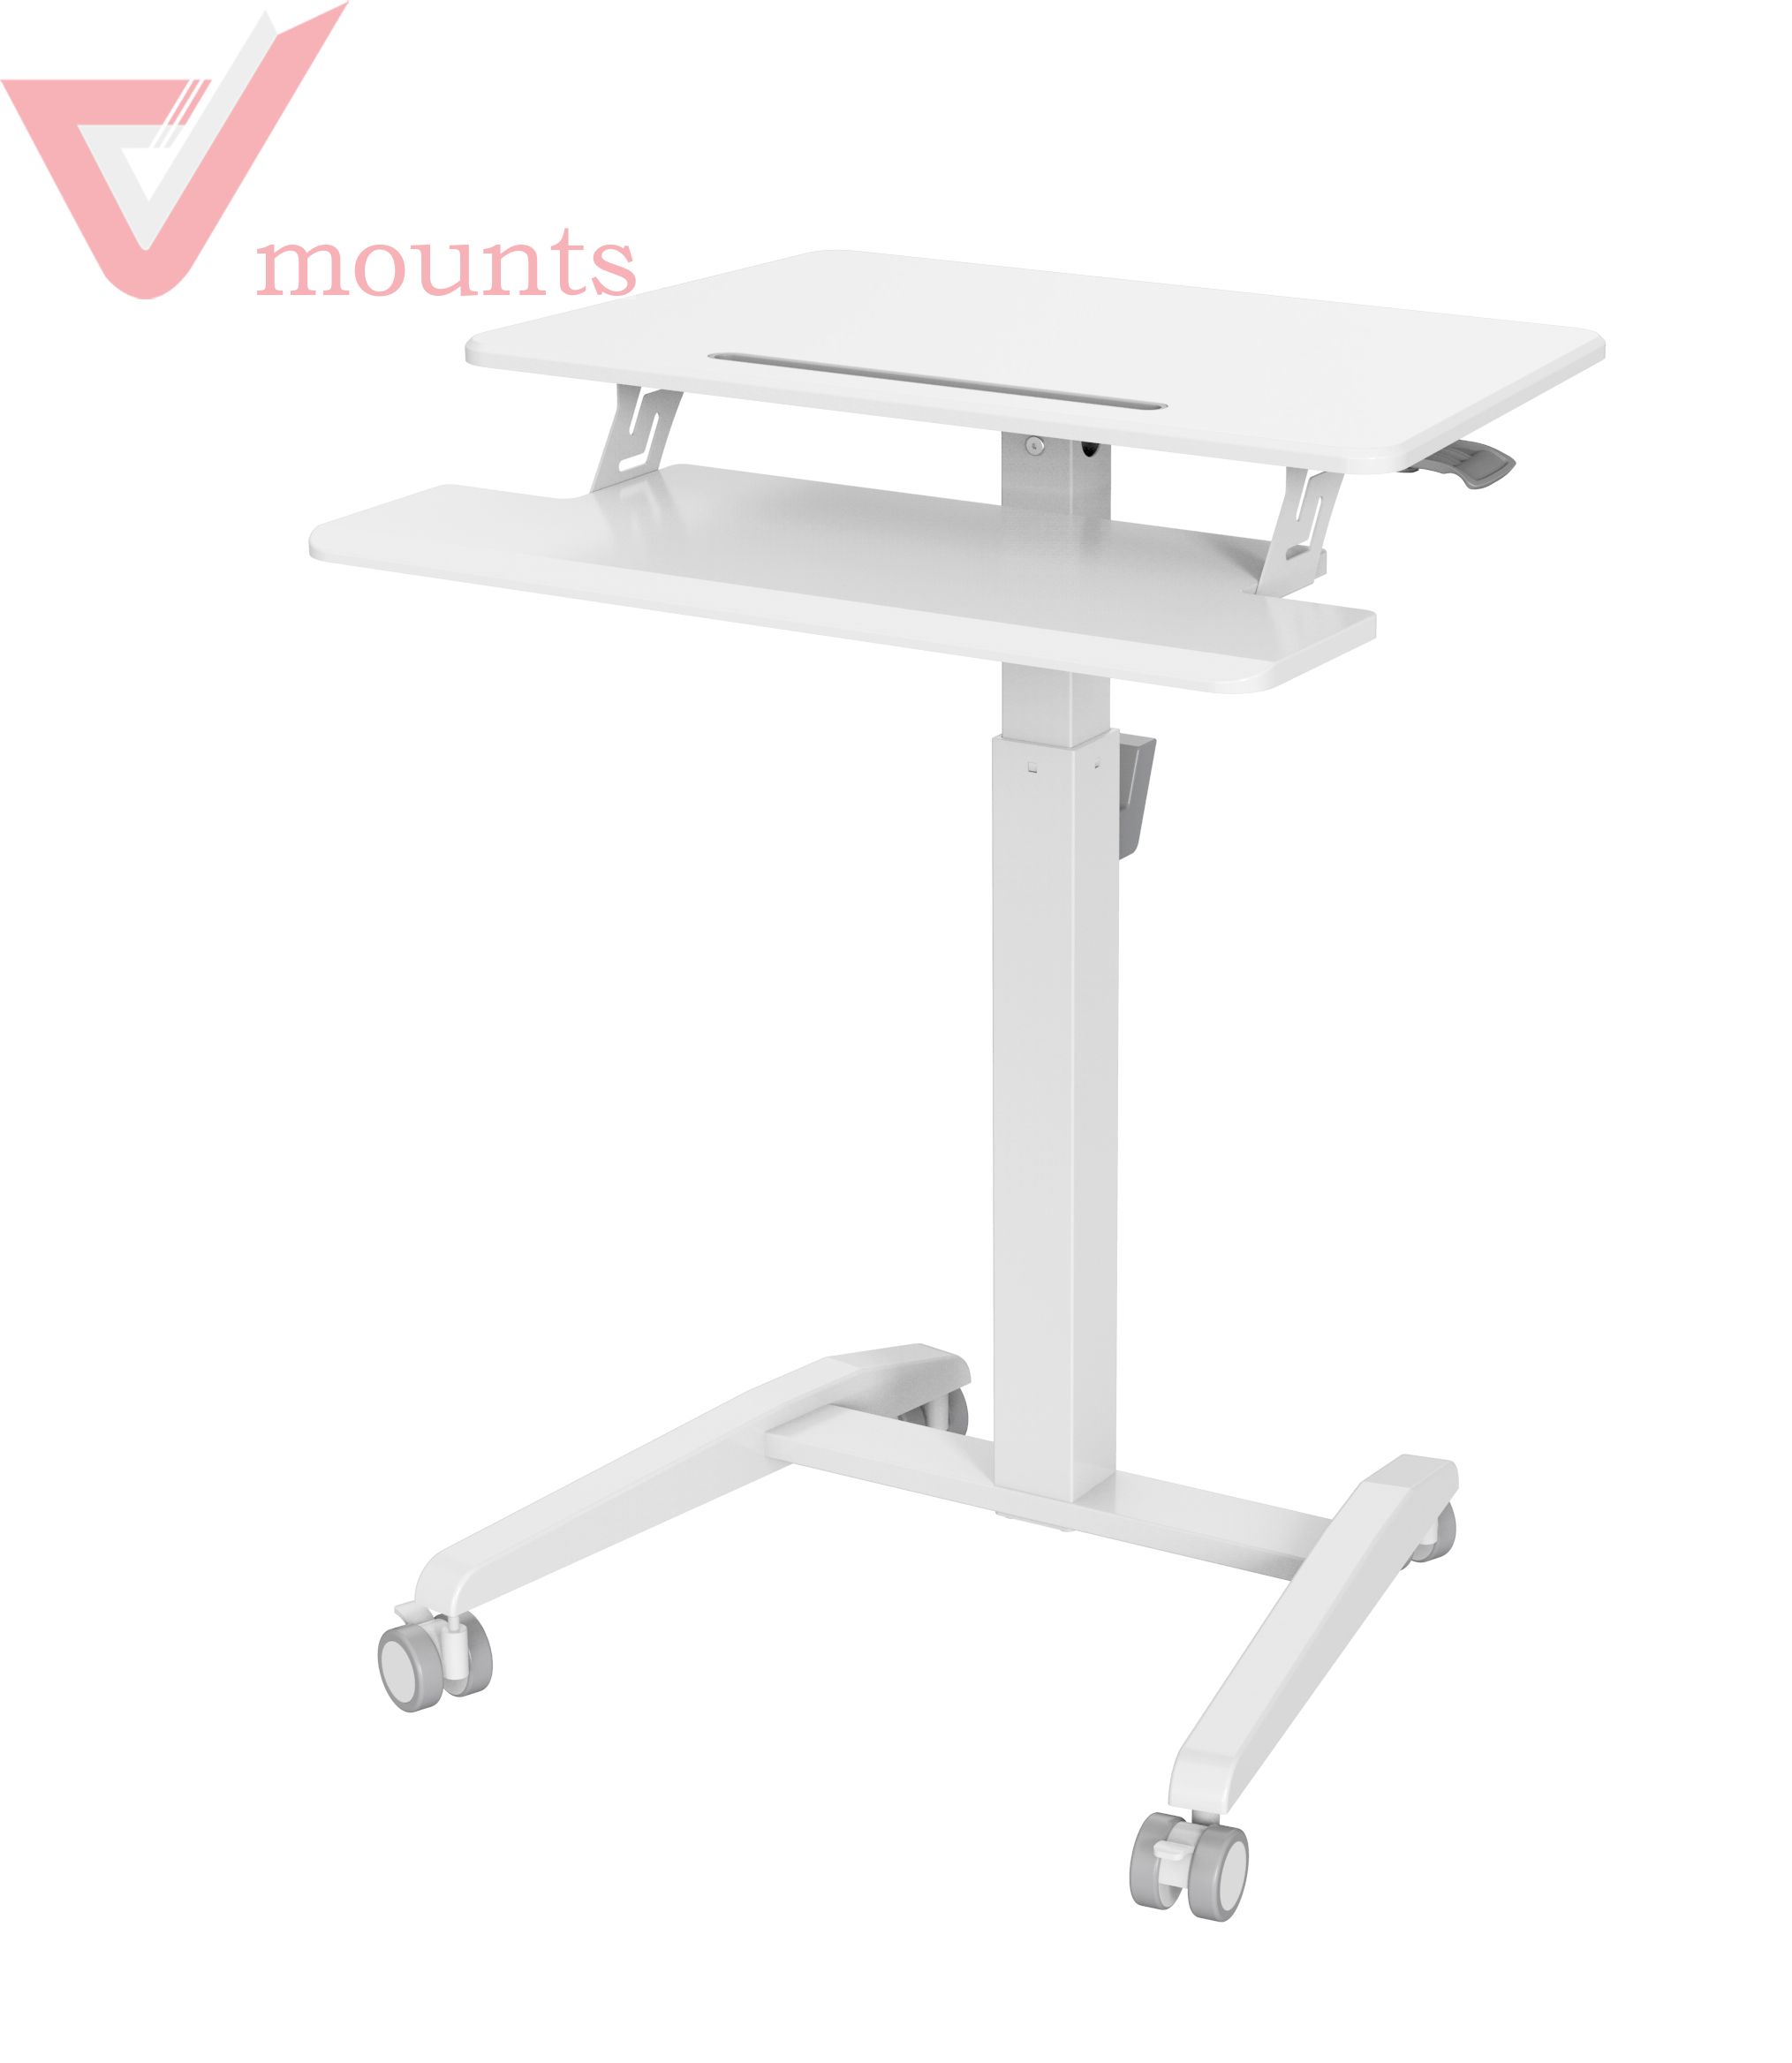 V-mounts Movable Office Desk